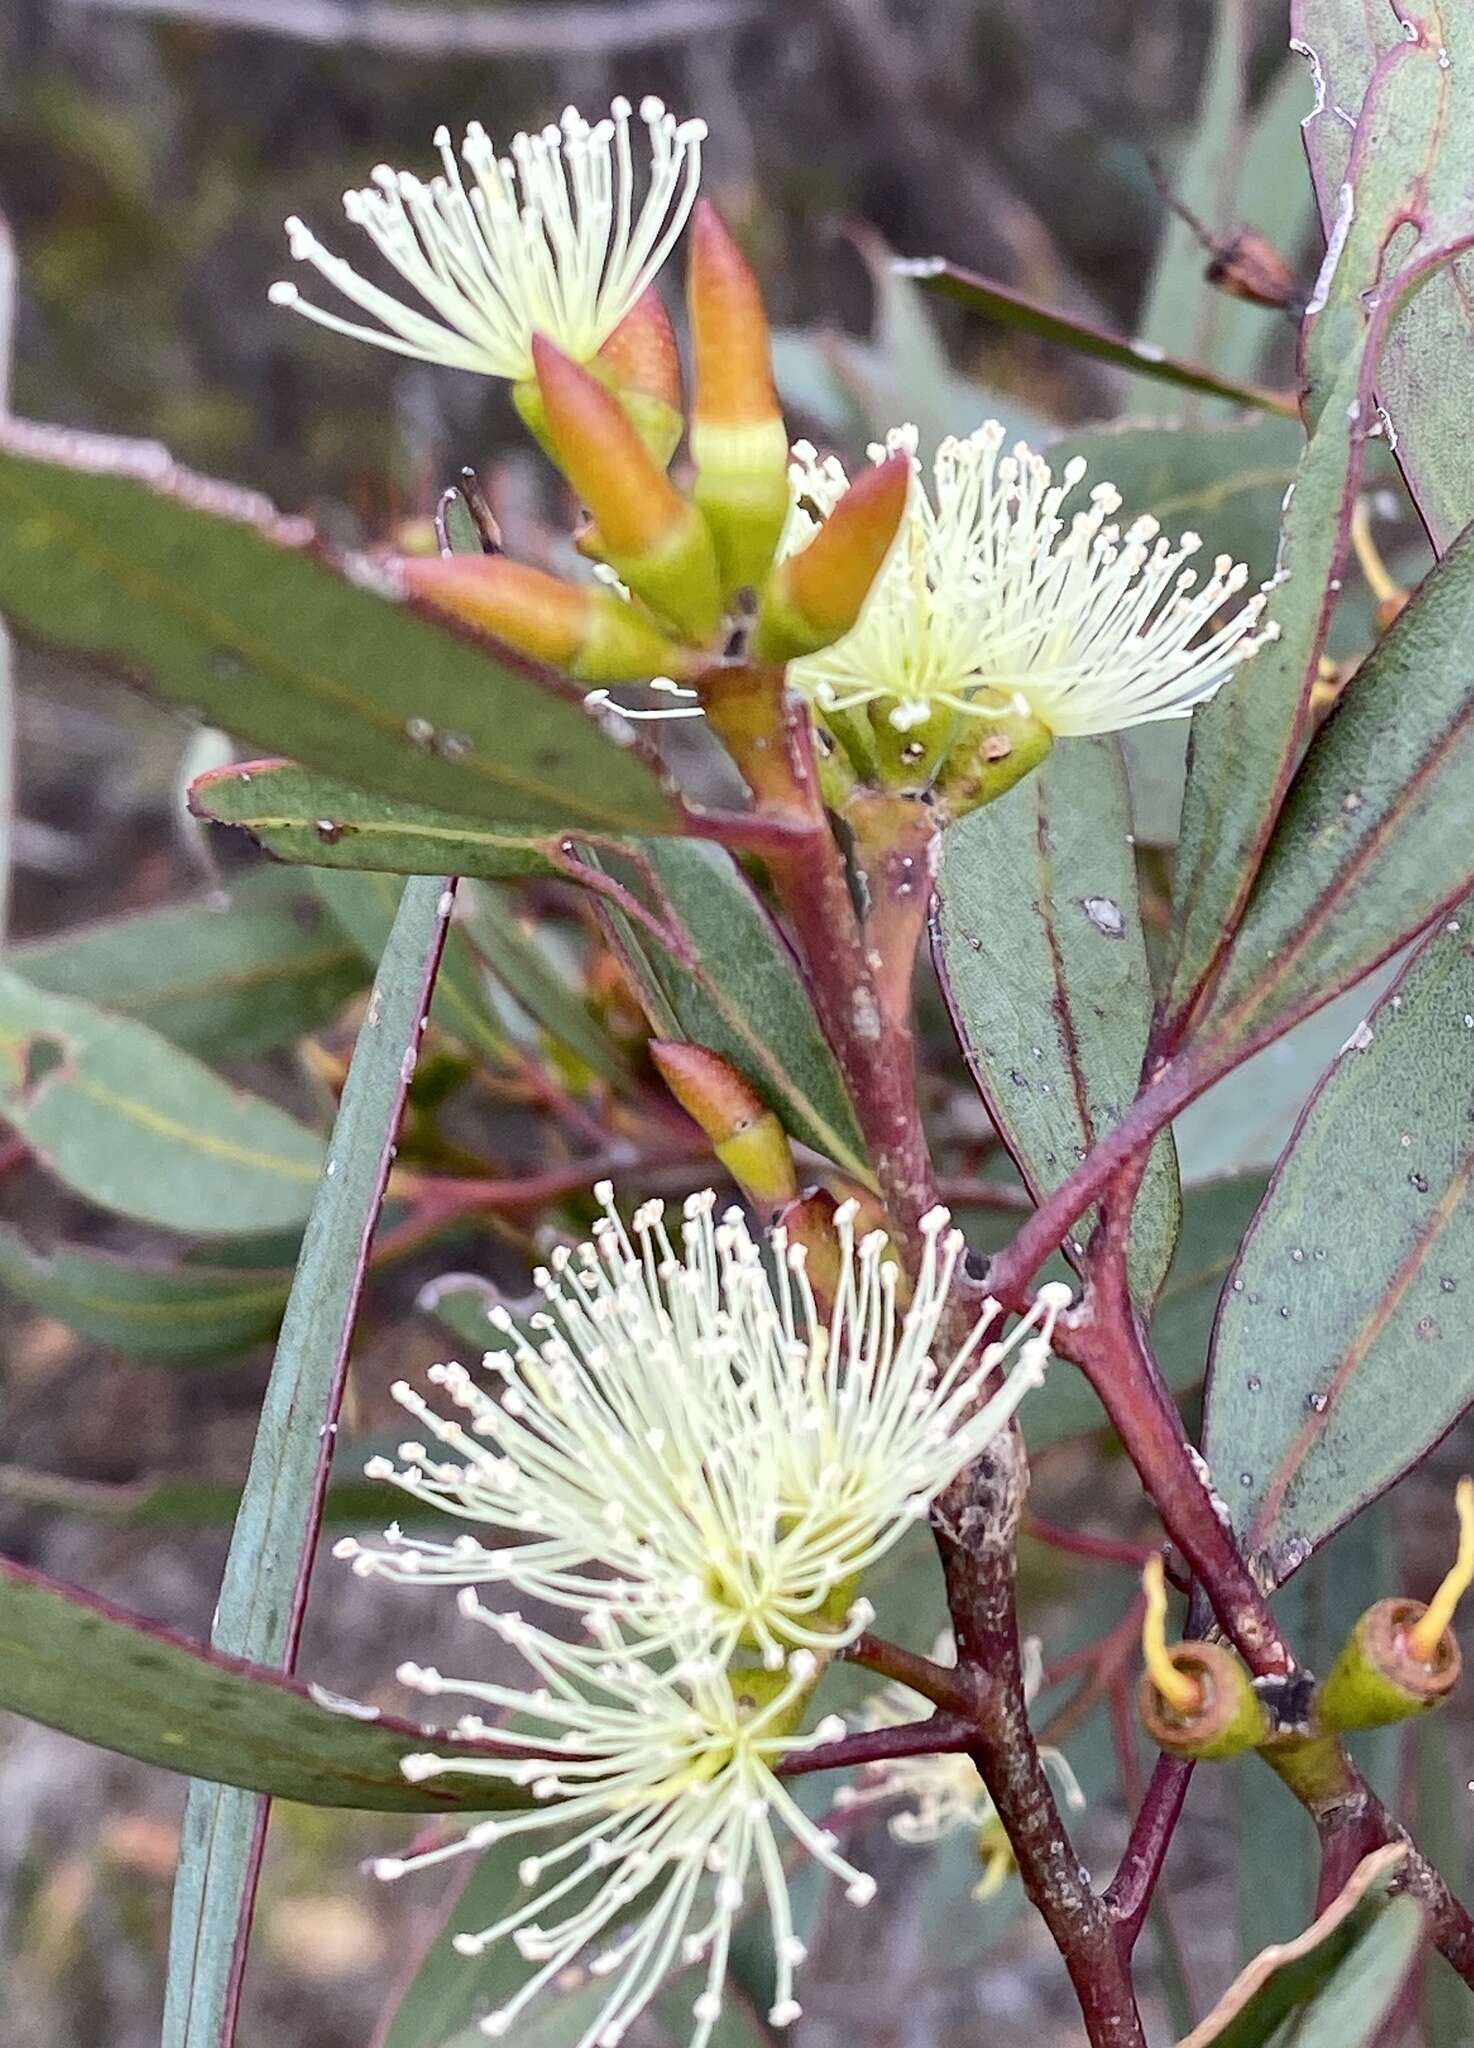 Image of Eucalyptus phaenophylla M. I. H. Brooker & S. D. Hopper